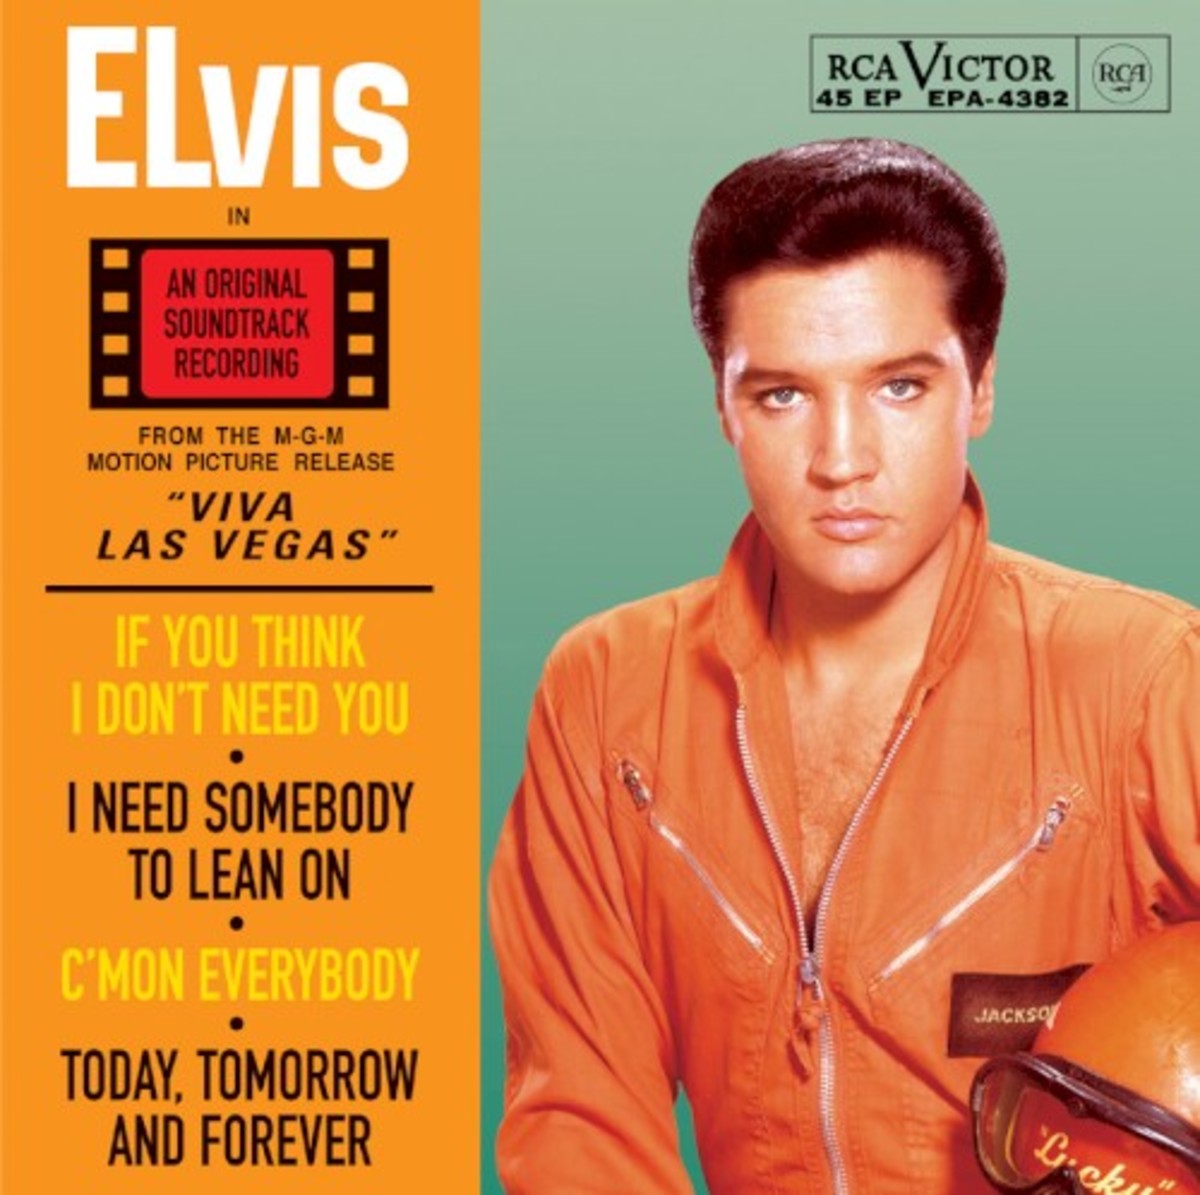 Viva Las Vegas soundtrack 45 on RCA Victor